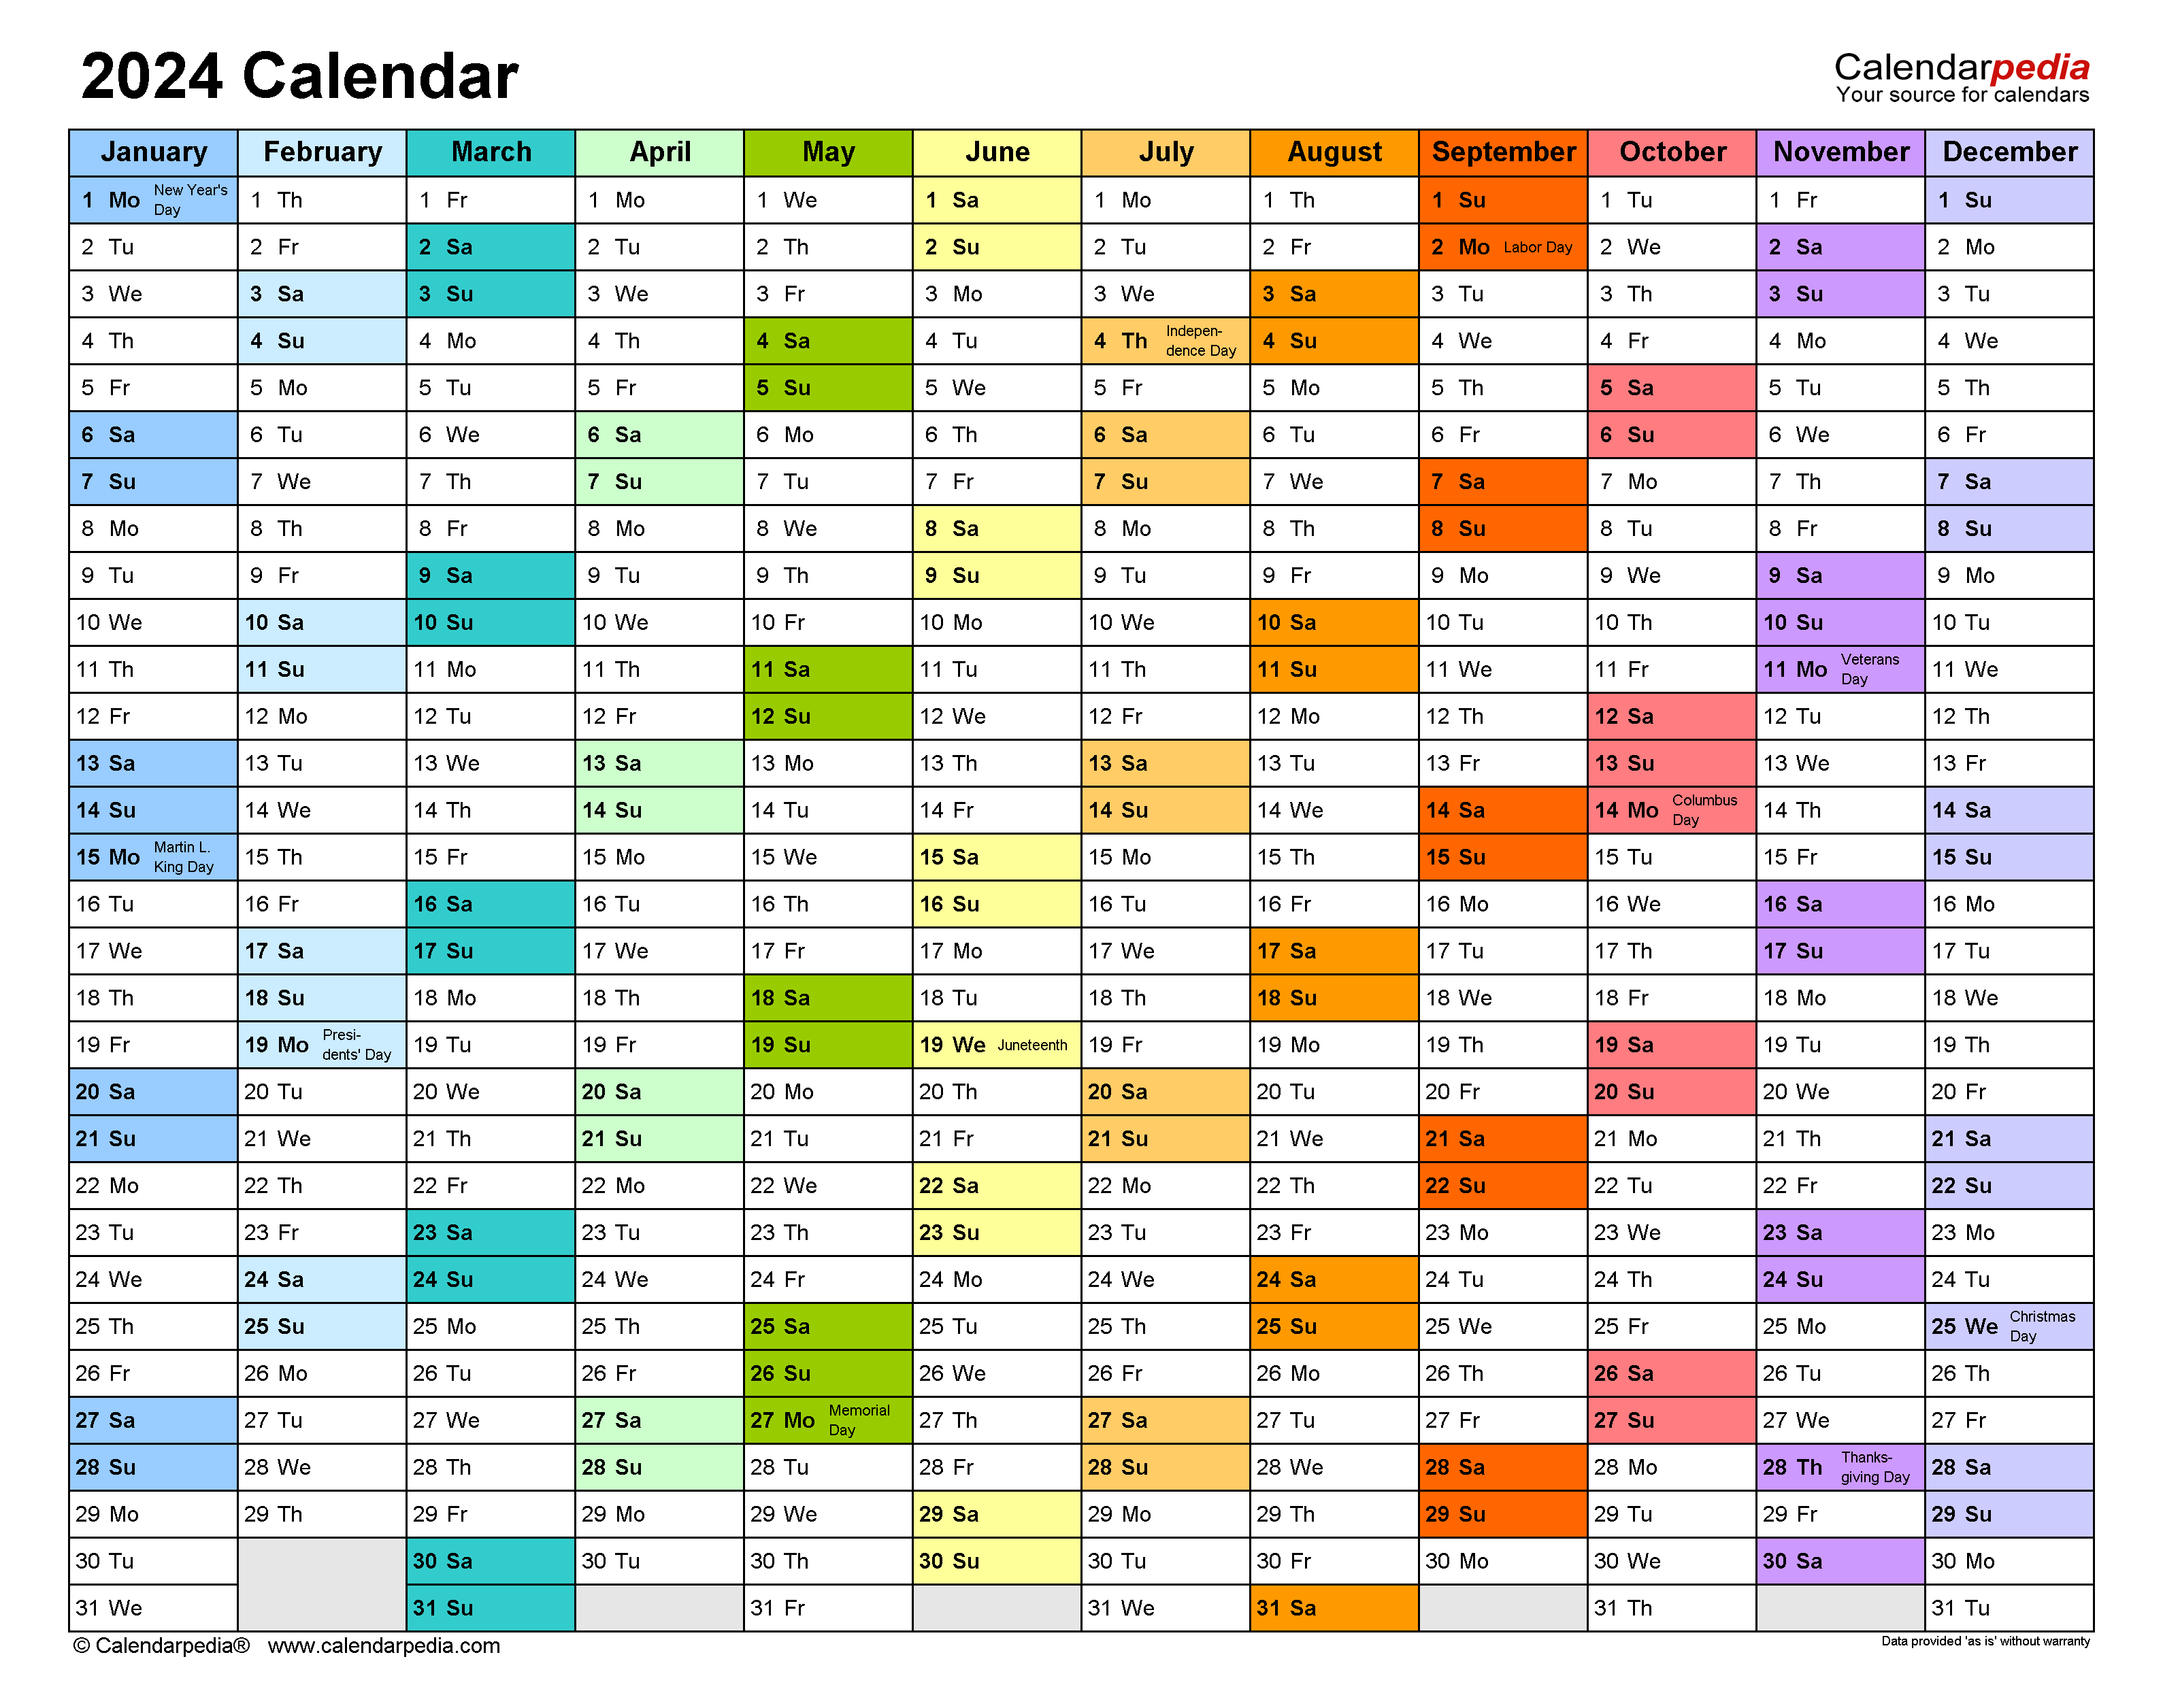 2024 Calendar - Free Printable Excel Templates - Calendarpedia for 2024 Calendar With Holidays Printable Excel